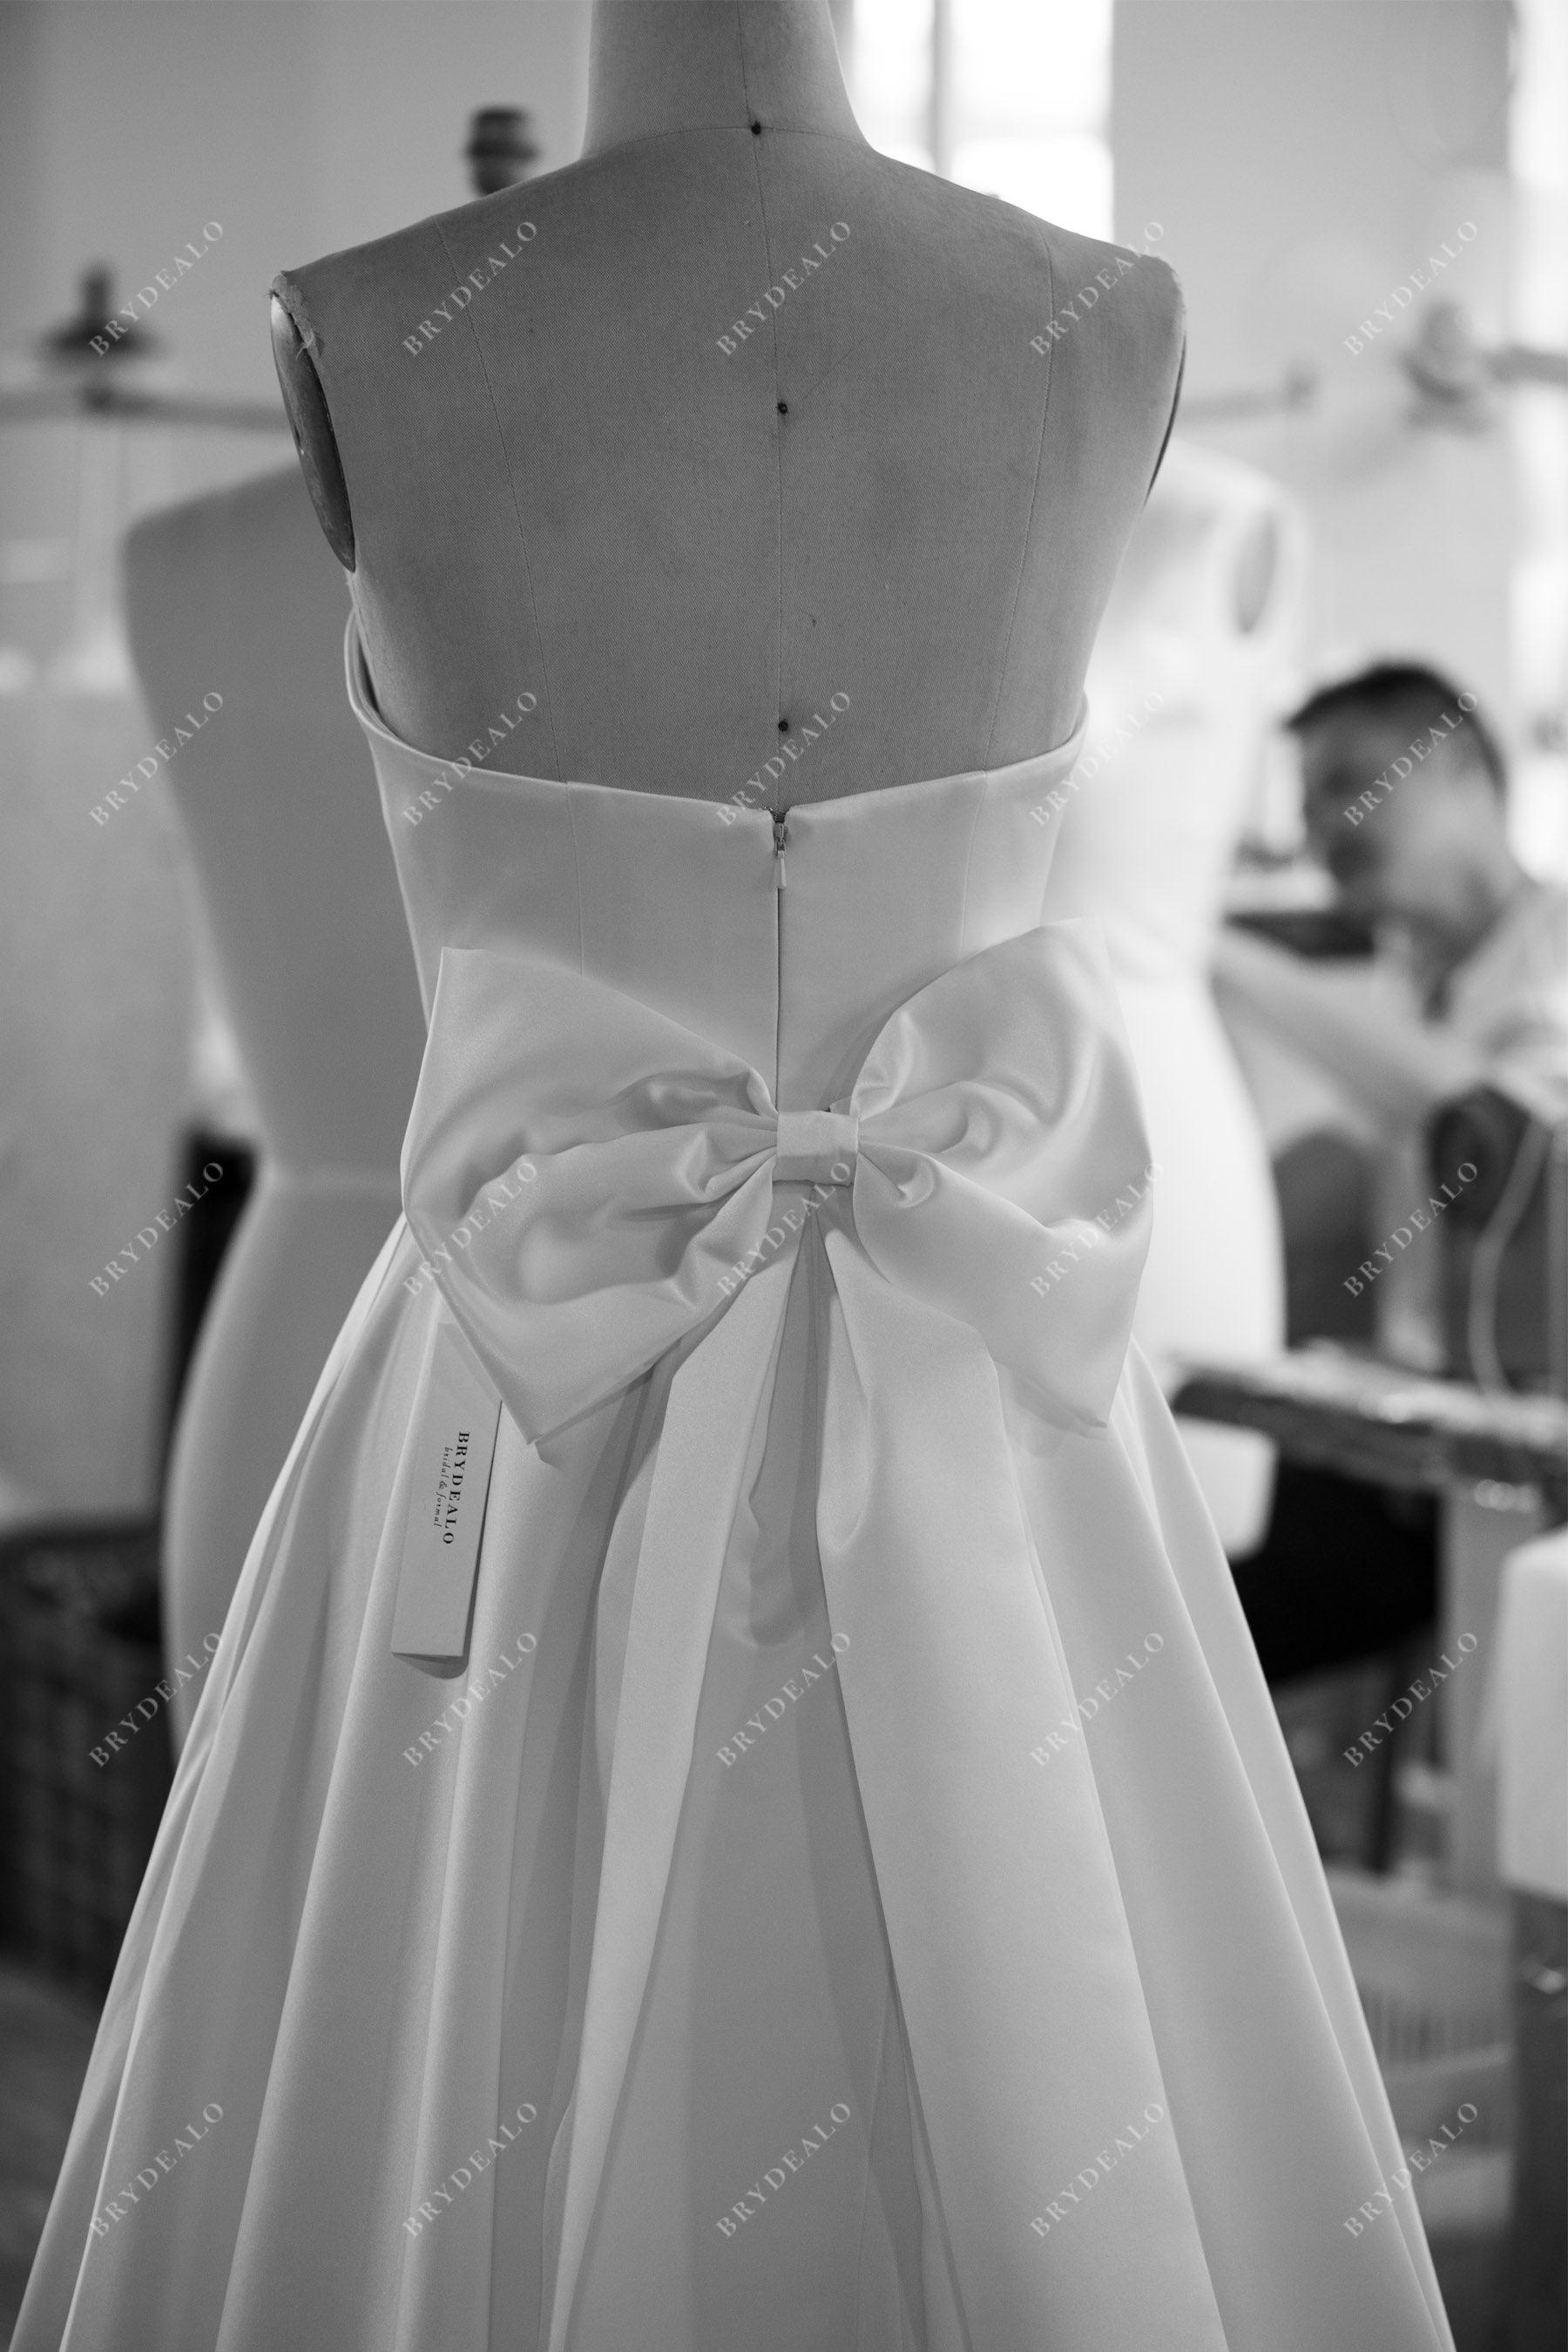 designer satin strapless wedding dress with bowknot